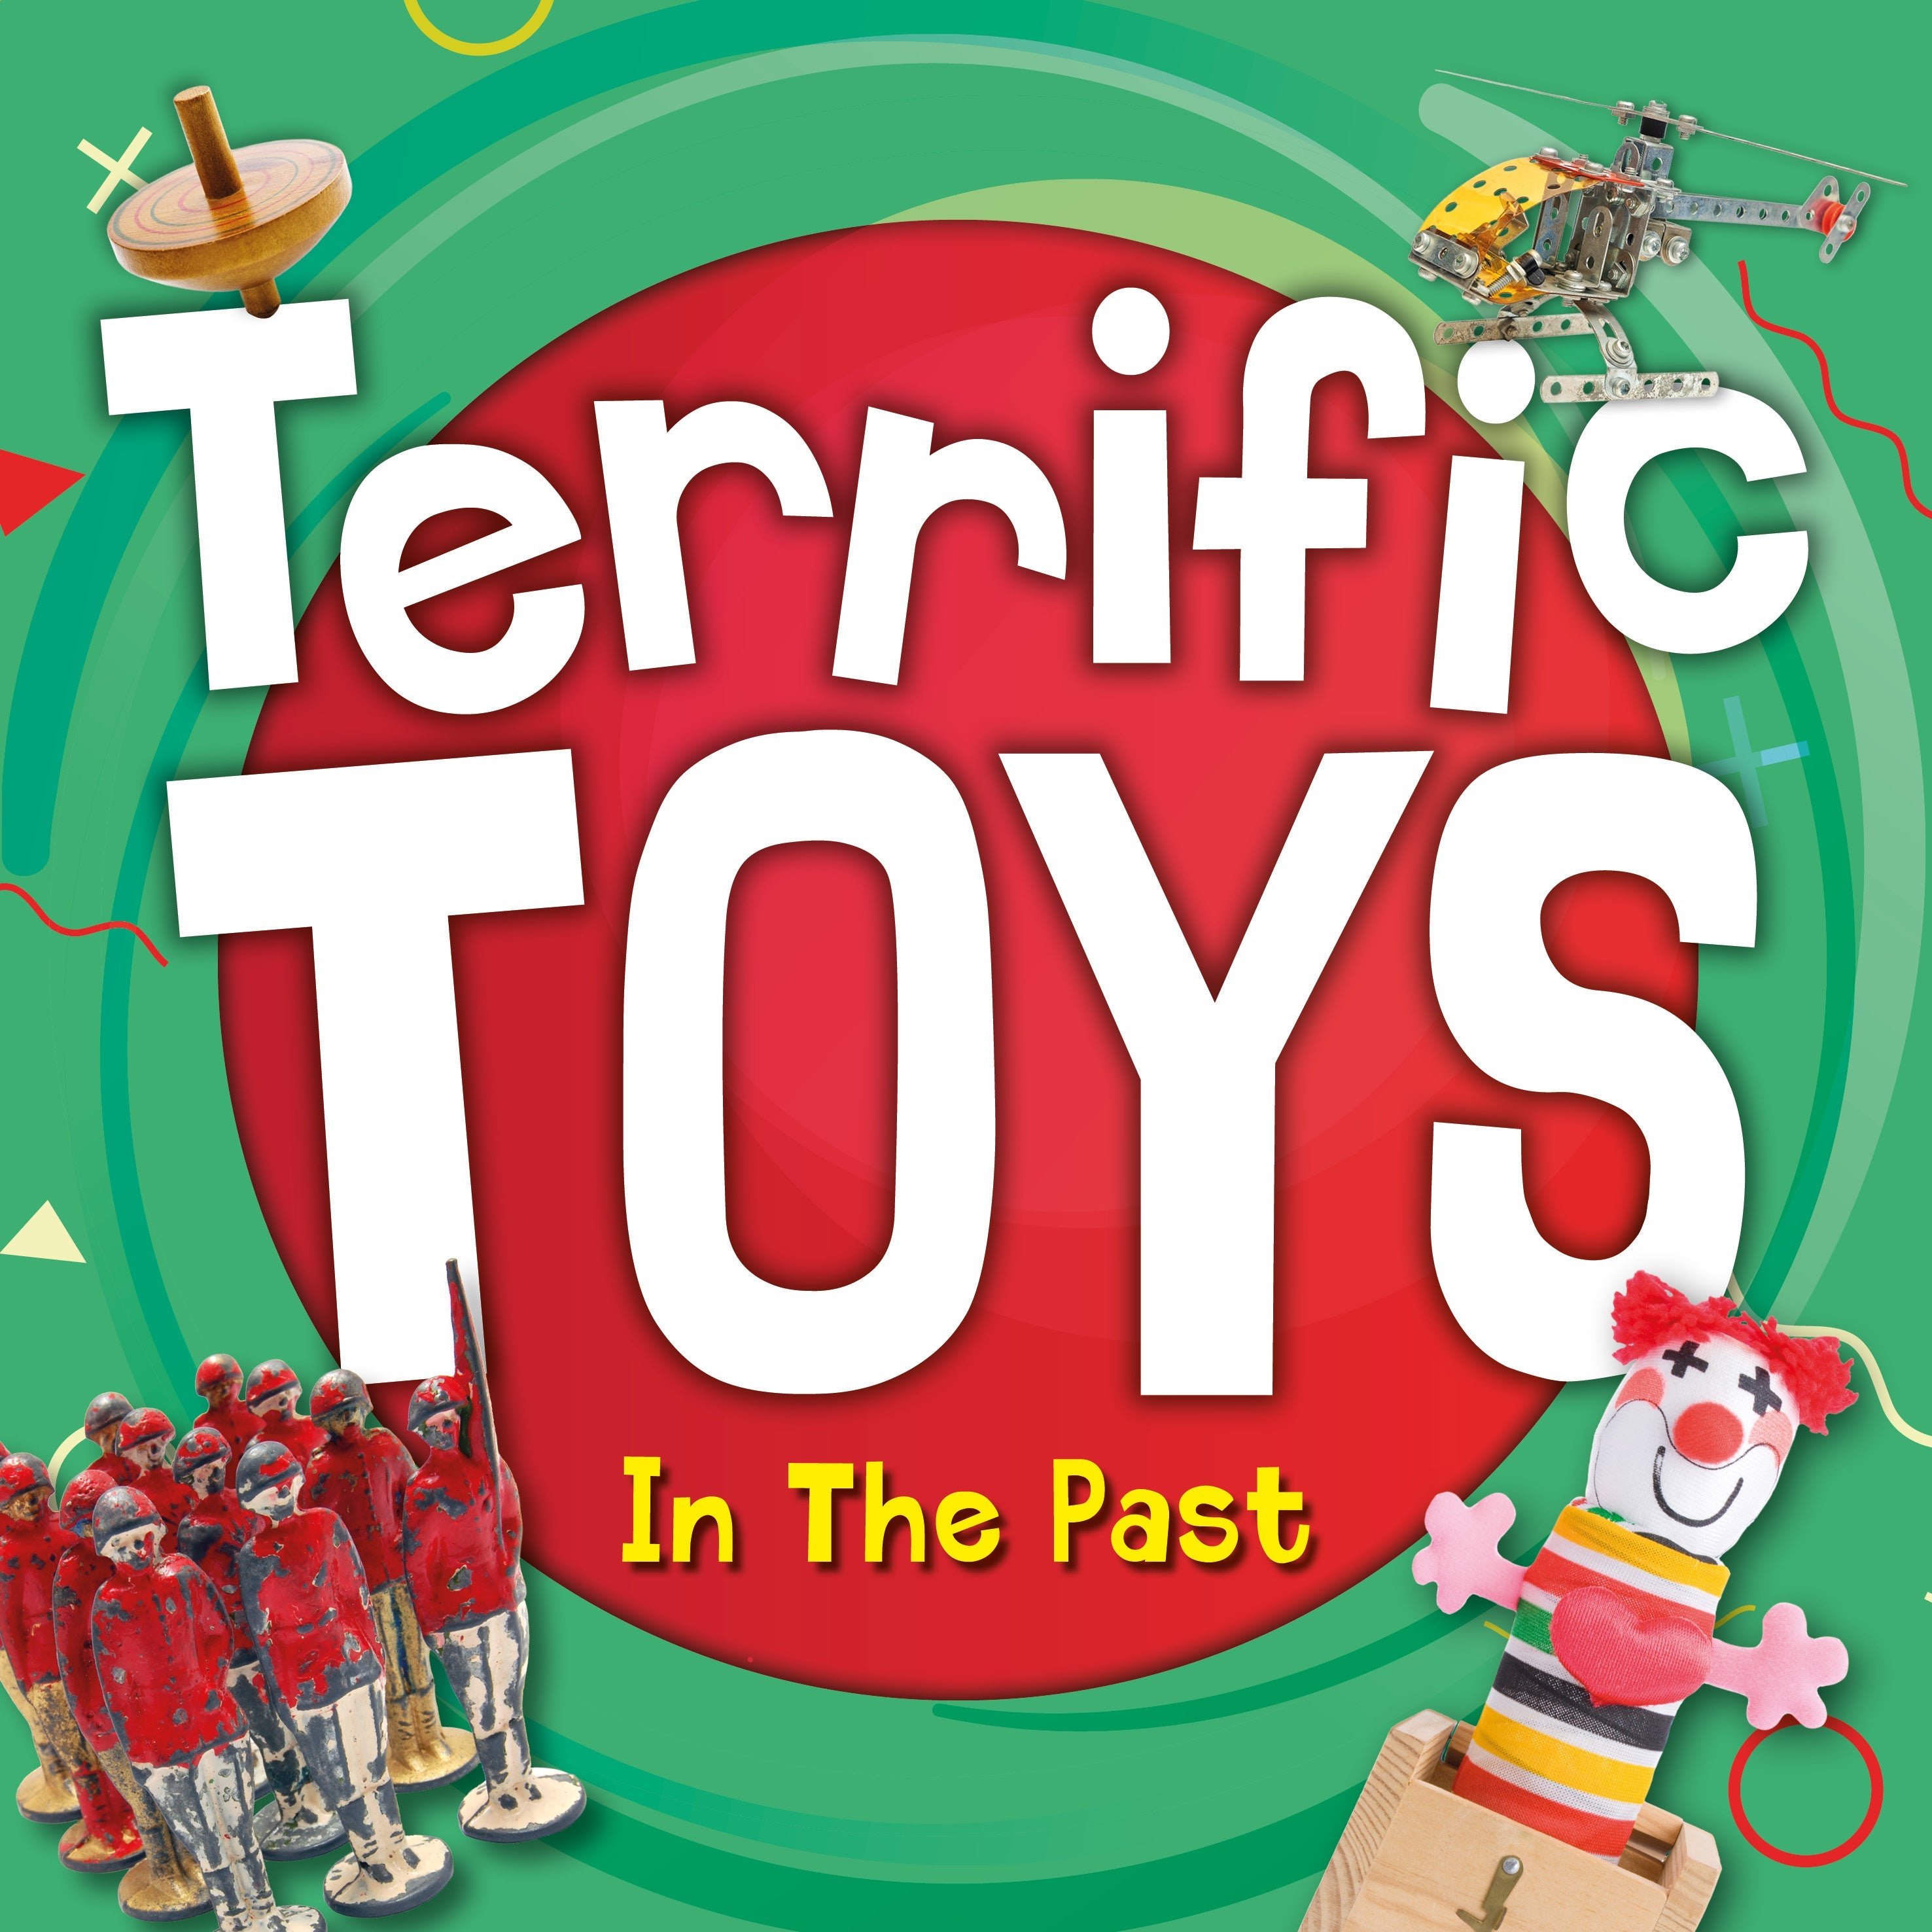 Terrific Toys: Terrific Toys in the Past e-Book